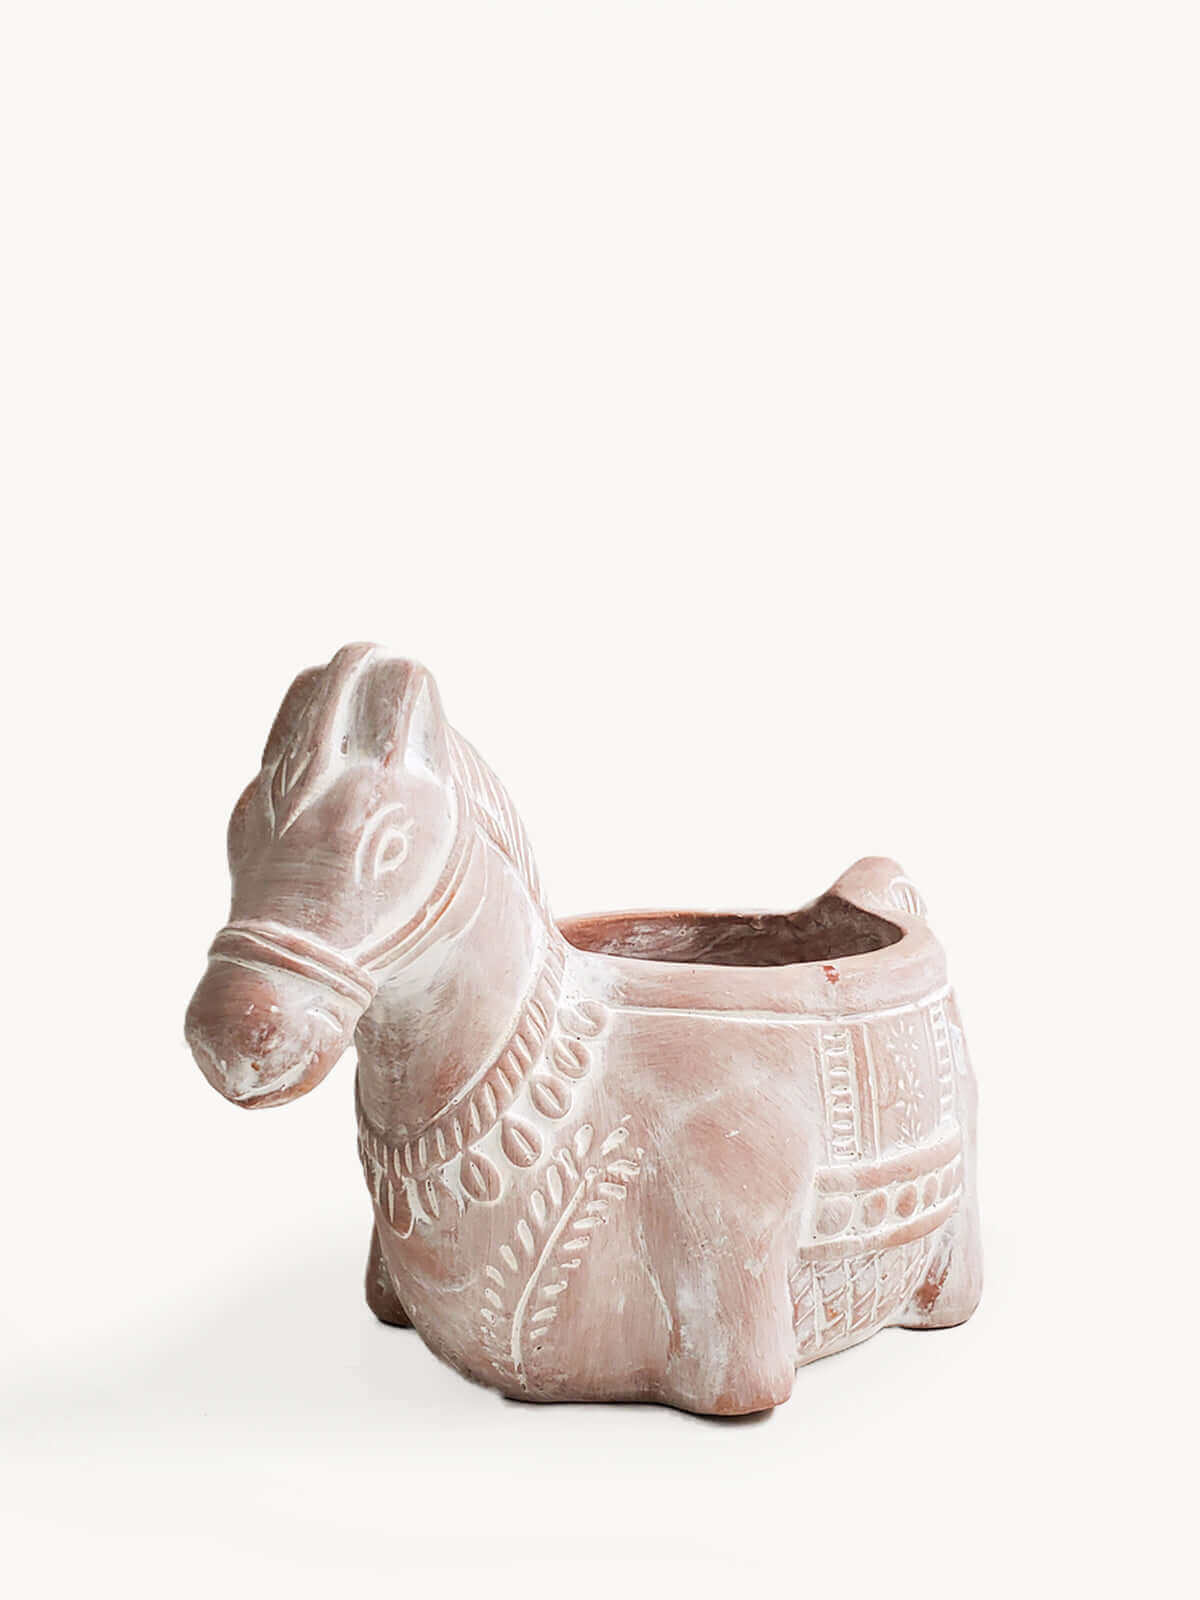 Terracotta Pot - Horse-0